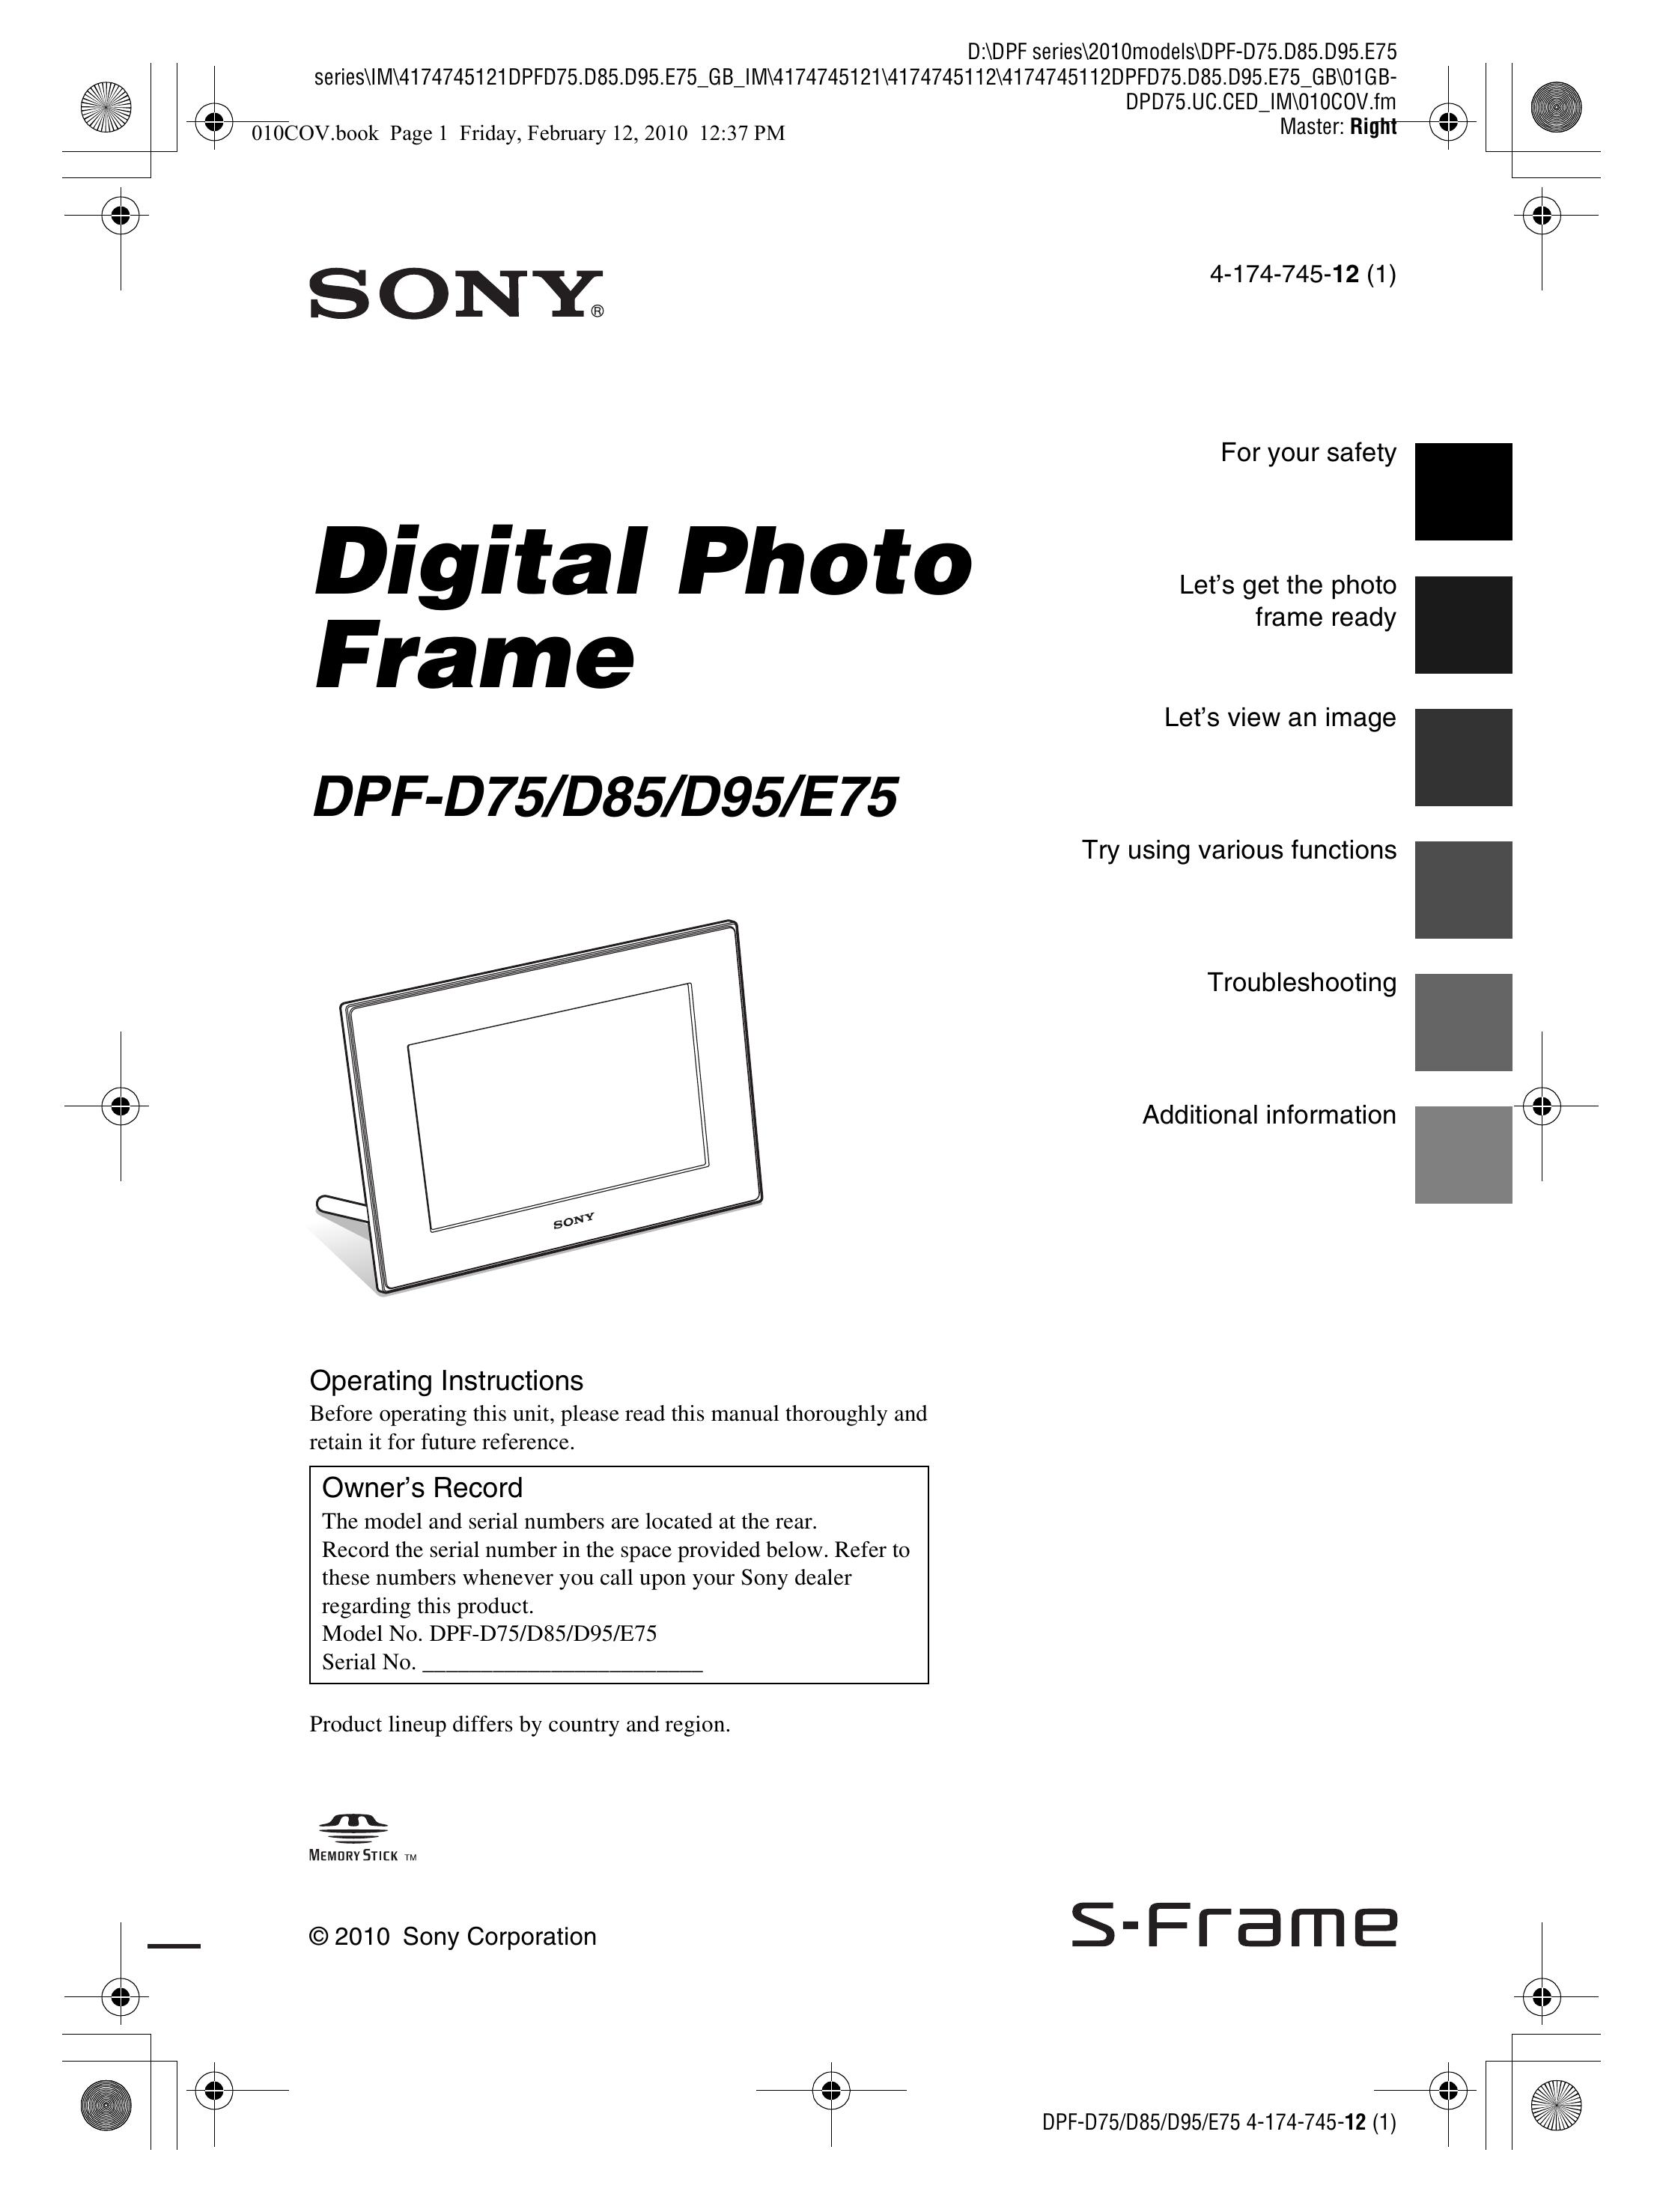 Sony DPF-D95 Digital Photo Frame User Manual